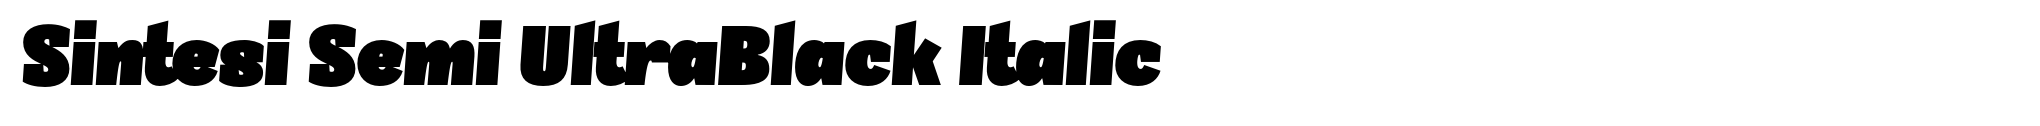 Sintesi Semi UltraBlack Italic image